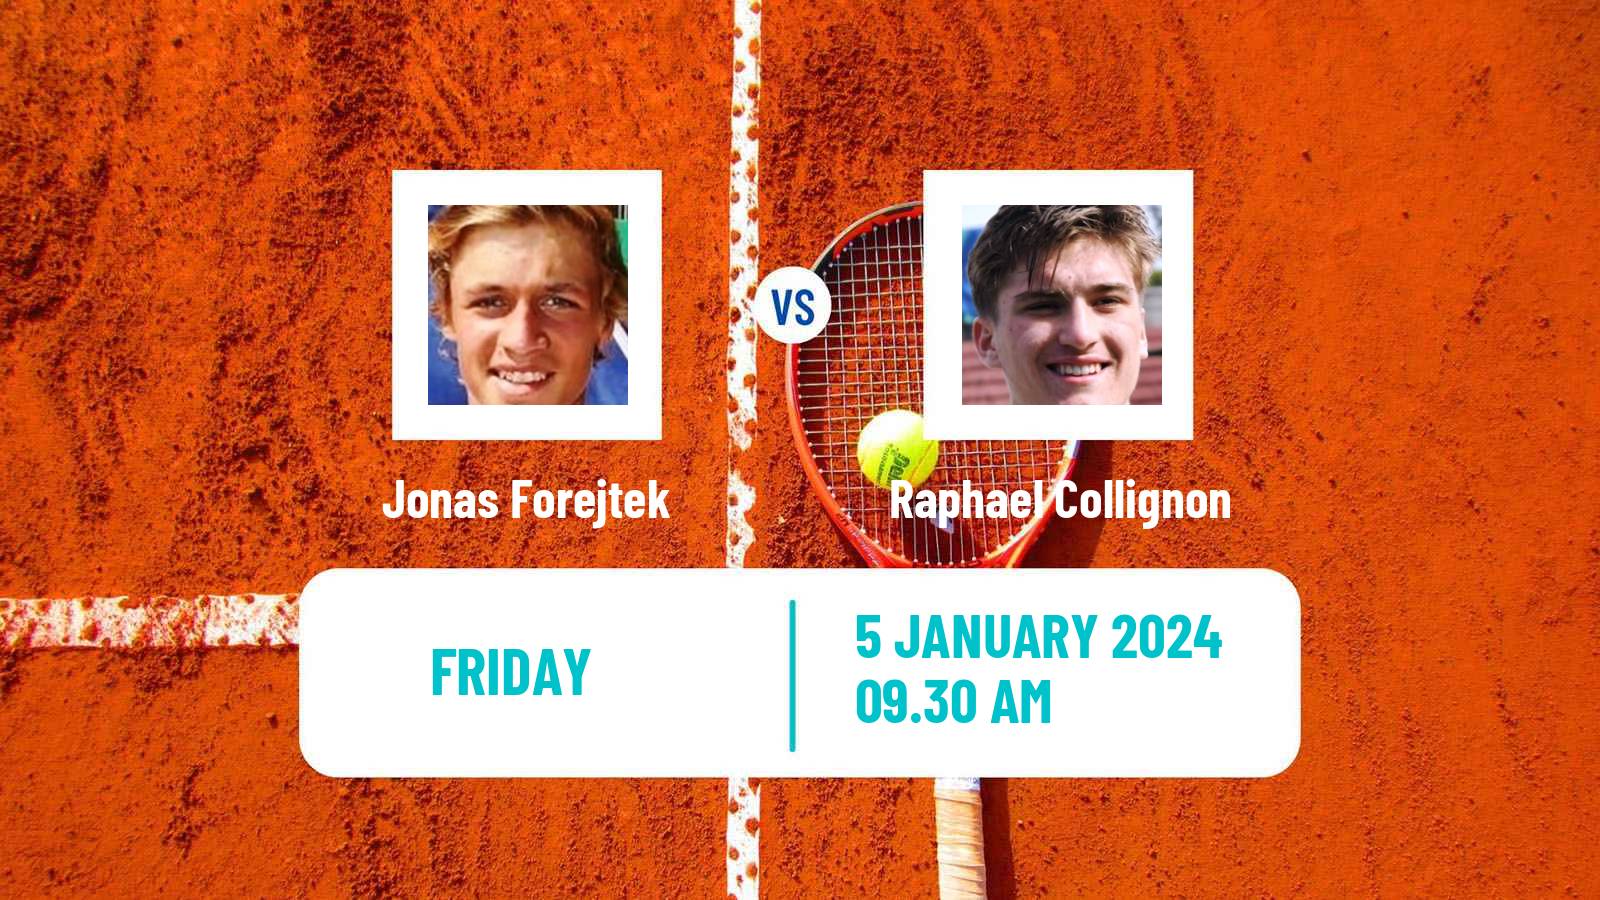 Tennis ITF M25 Esch Alzette Men Jonas Forejtek - Raphael Collignon